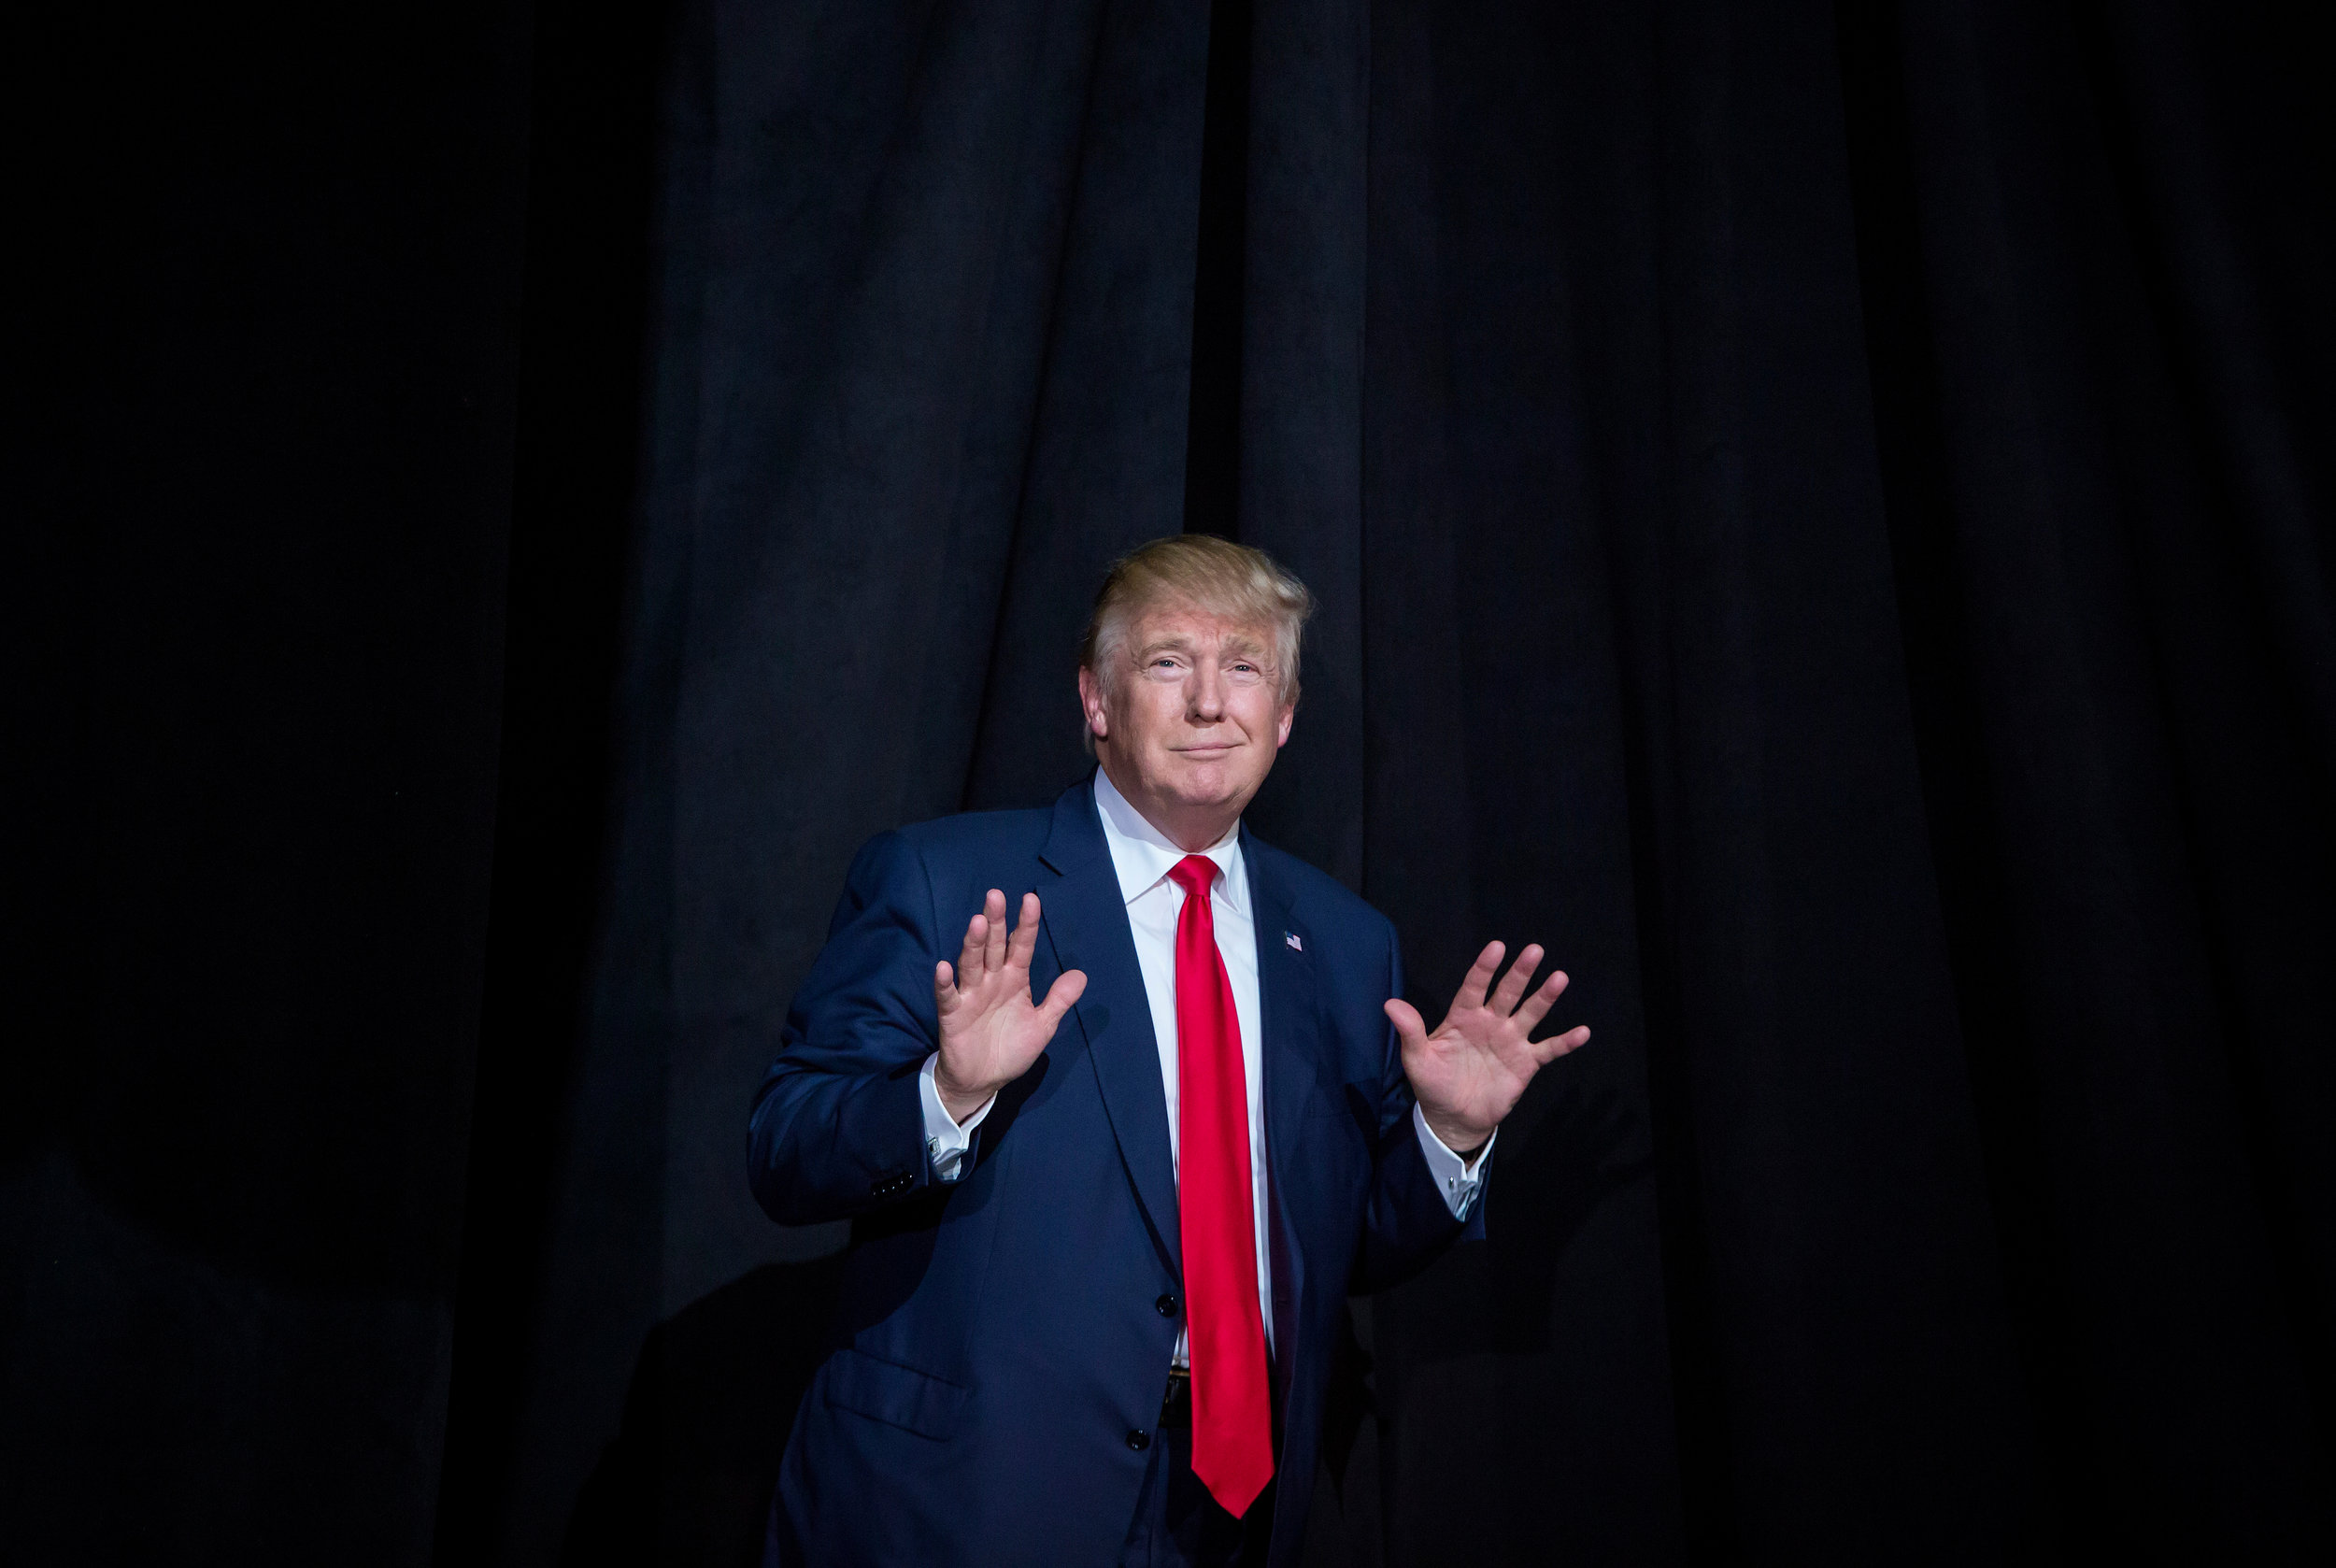   Donald Trump. Tampa, FL. 2016  